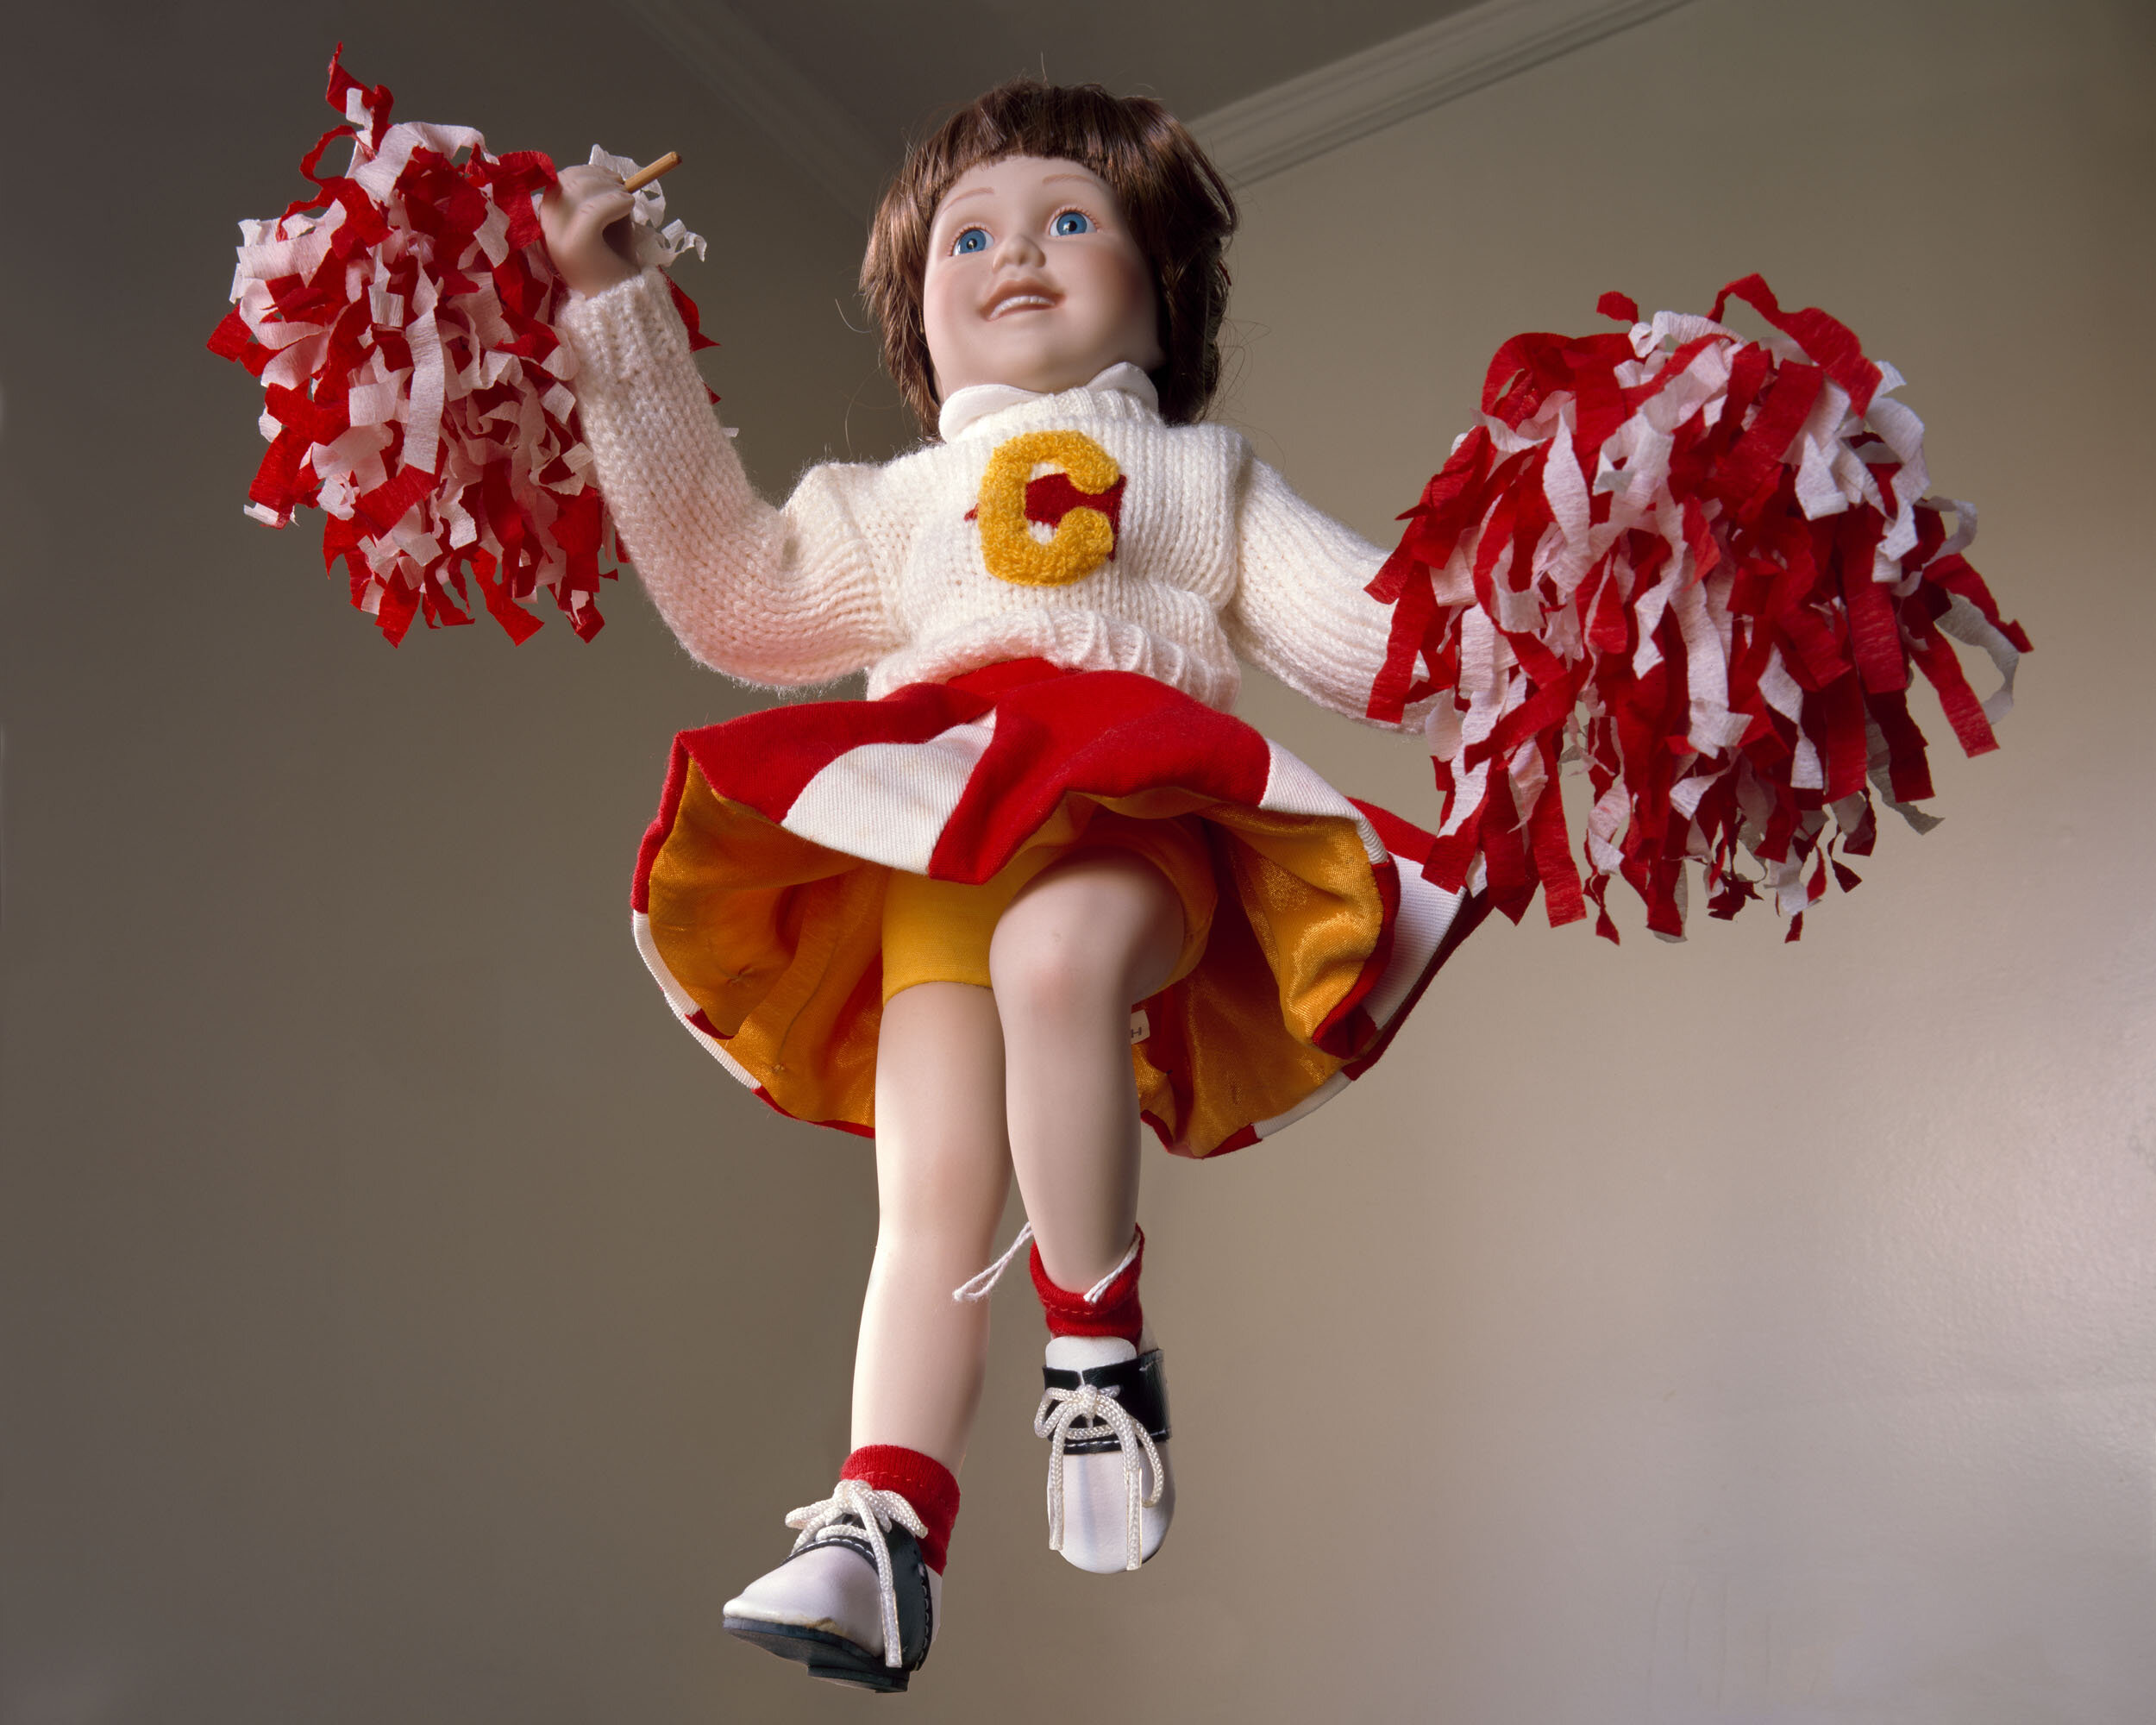 Cheerleader-001.jpg